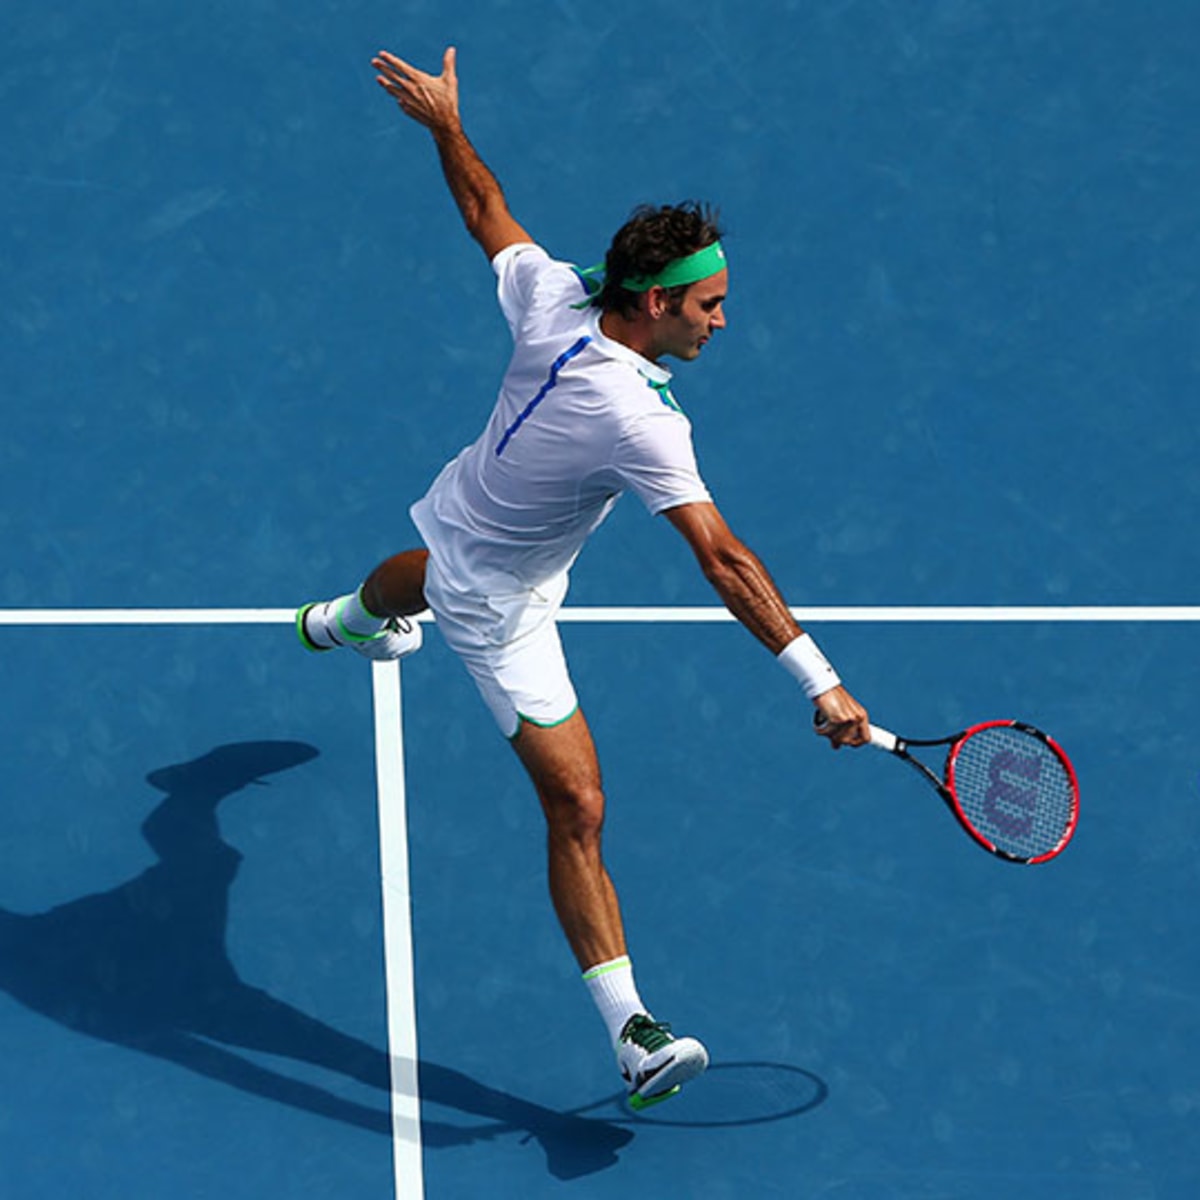 Атакующий теннис. Бэкхенд Роджер Федерер. Roger Federer backhand. Backhand shot теннис. Федерер Роджер удар слева.